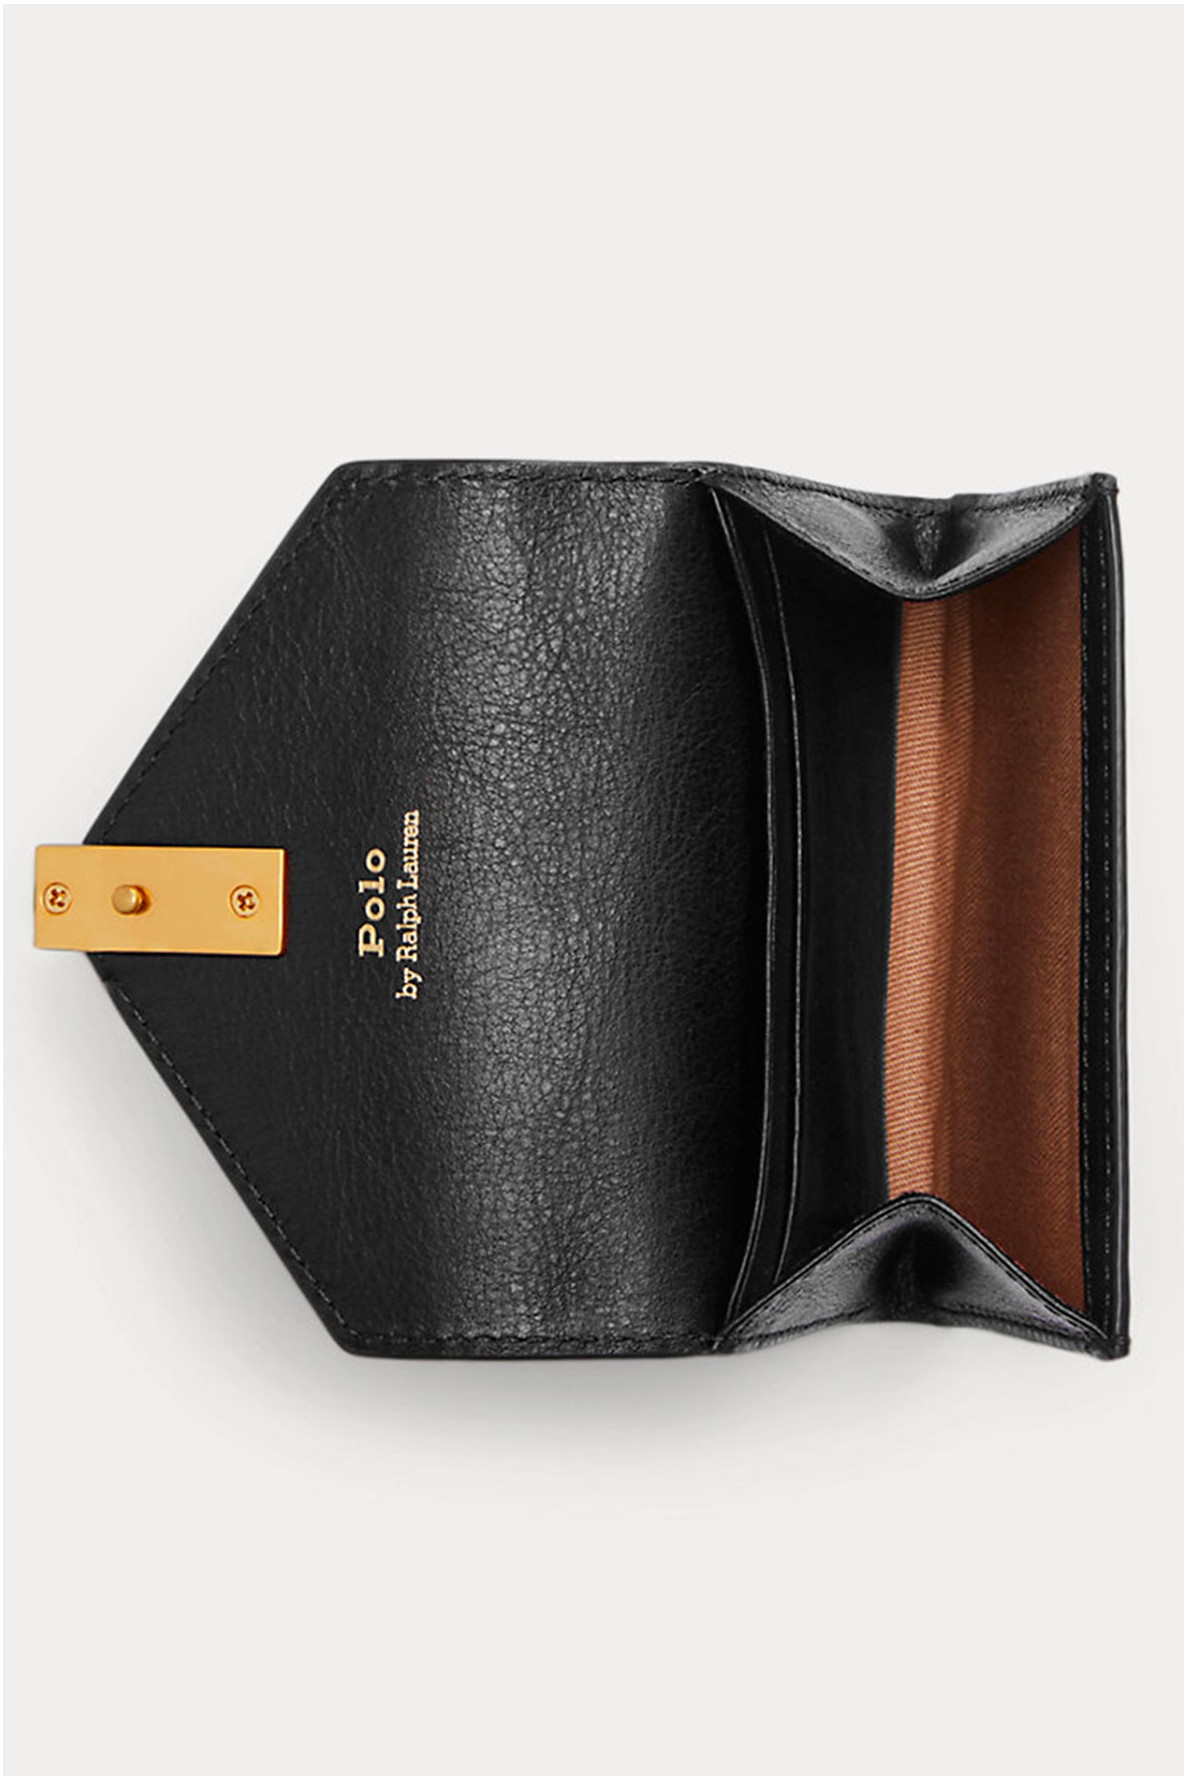 Polo black wallet